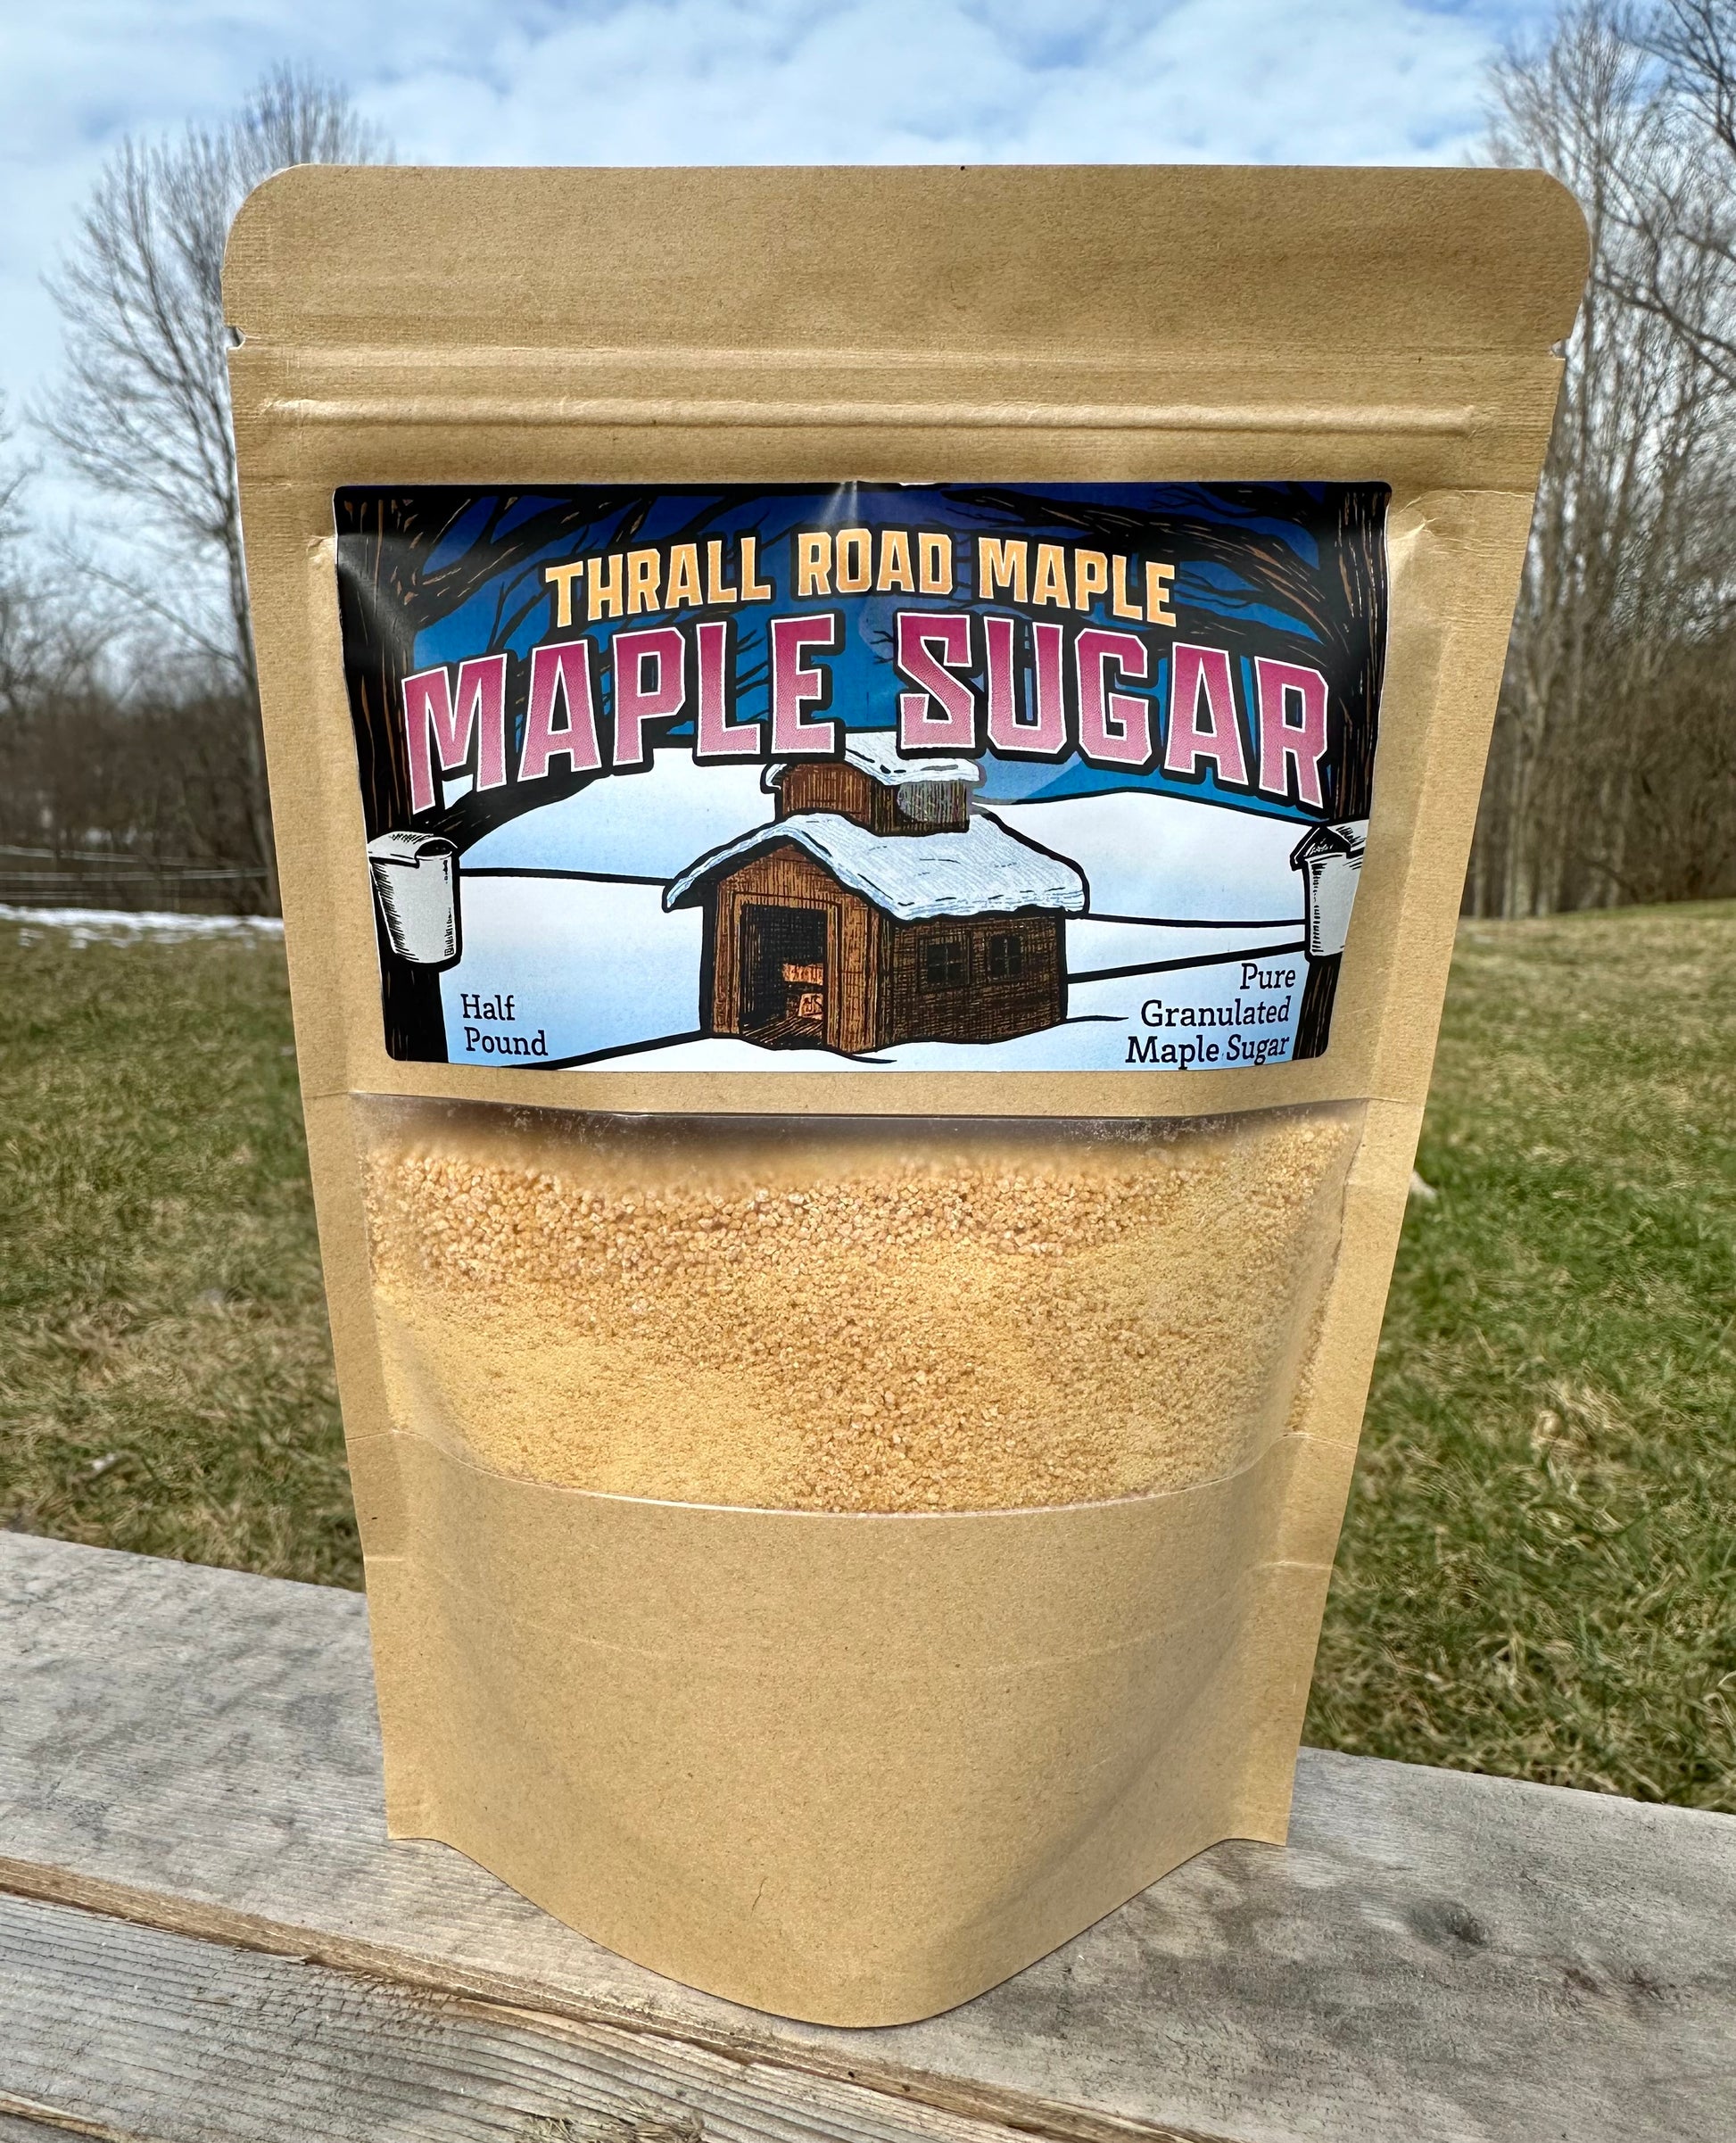 Thrall Road Maple Sugar - Half Pound